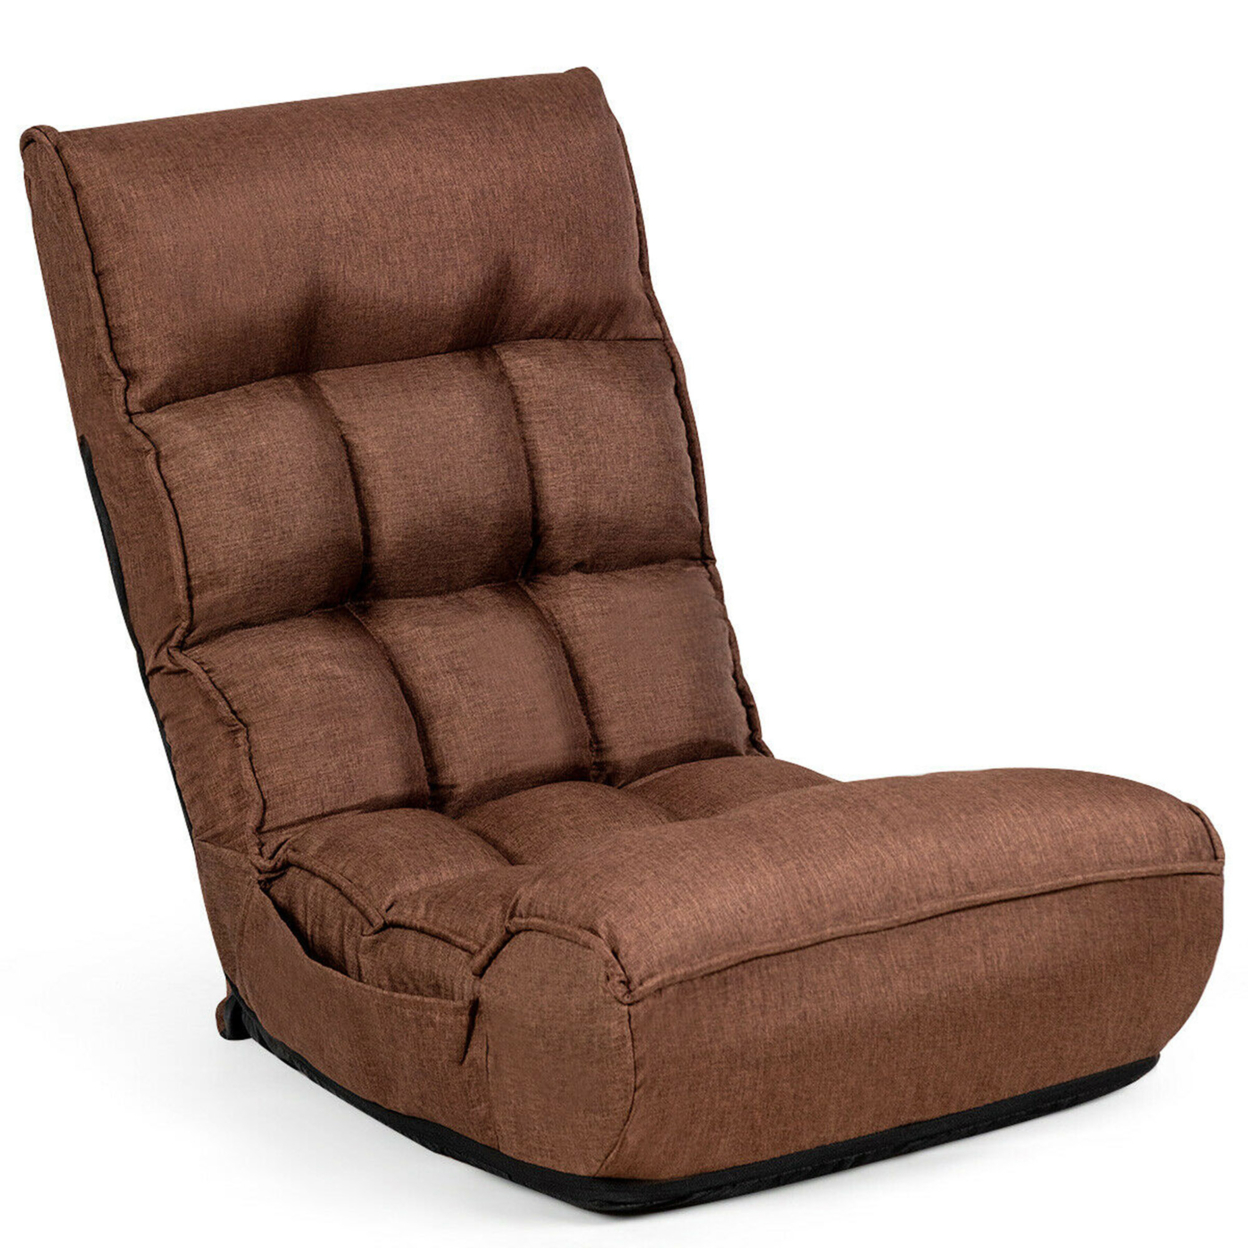 4-Position Floor Chair Folding Lazy Sofa W/Adjustable Backrest & Headrest - Coffee